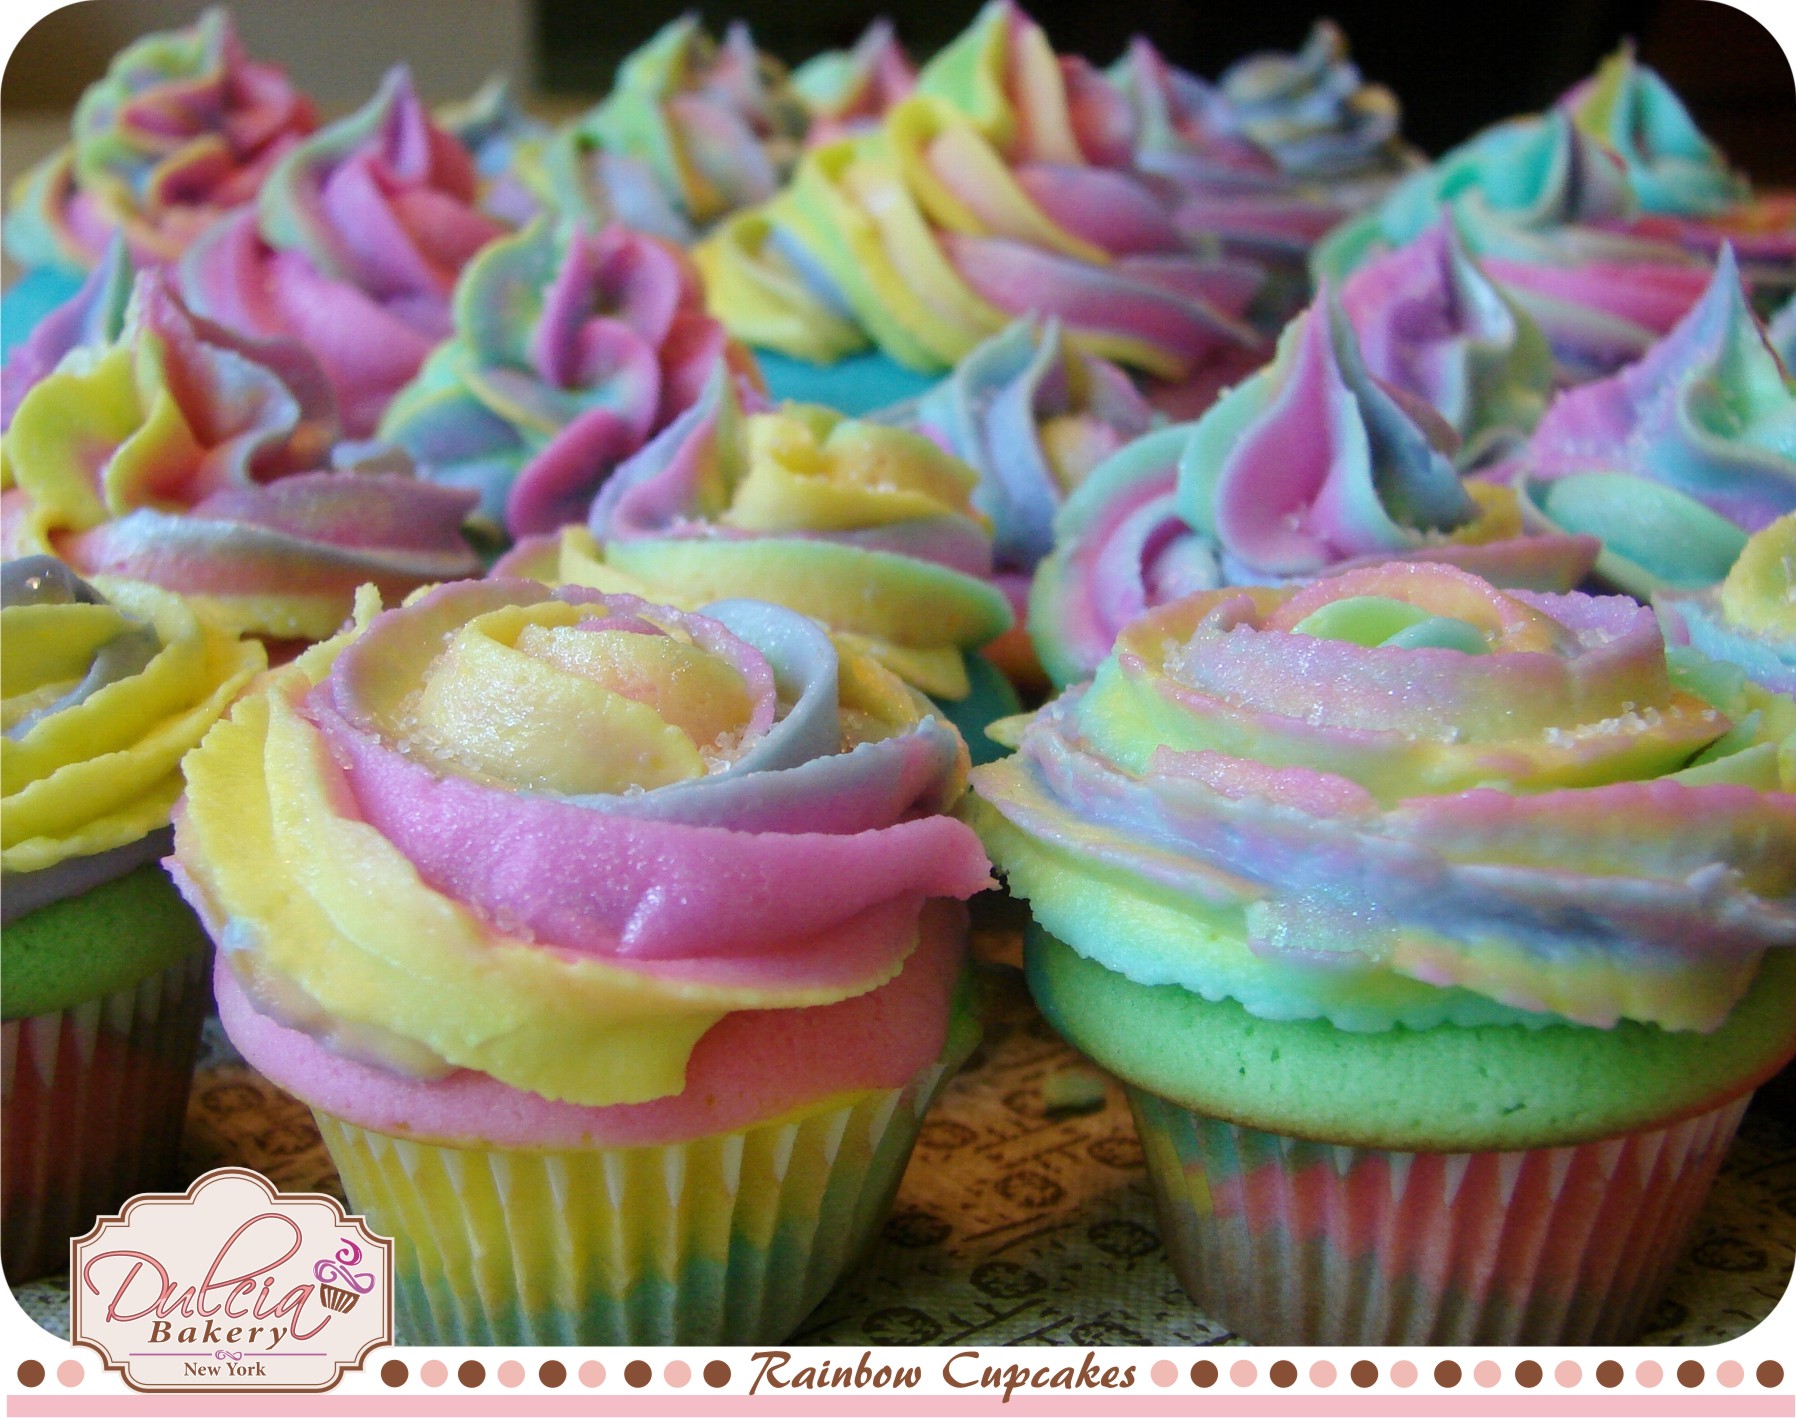 I Made the Cake Rainbow Cupcakes